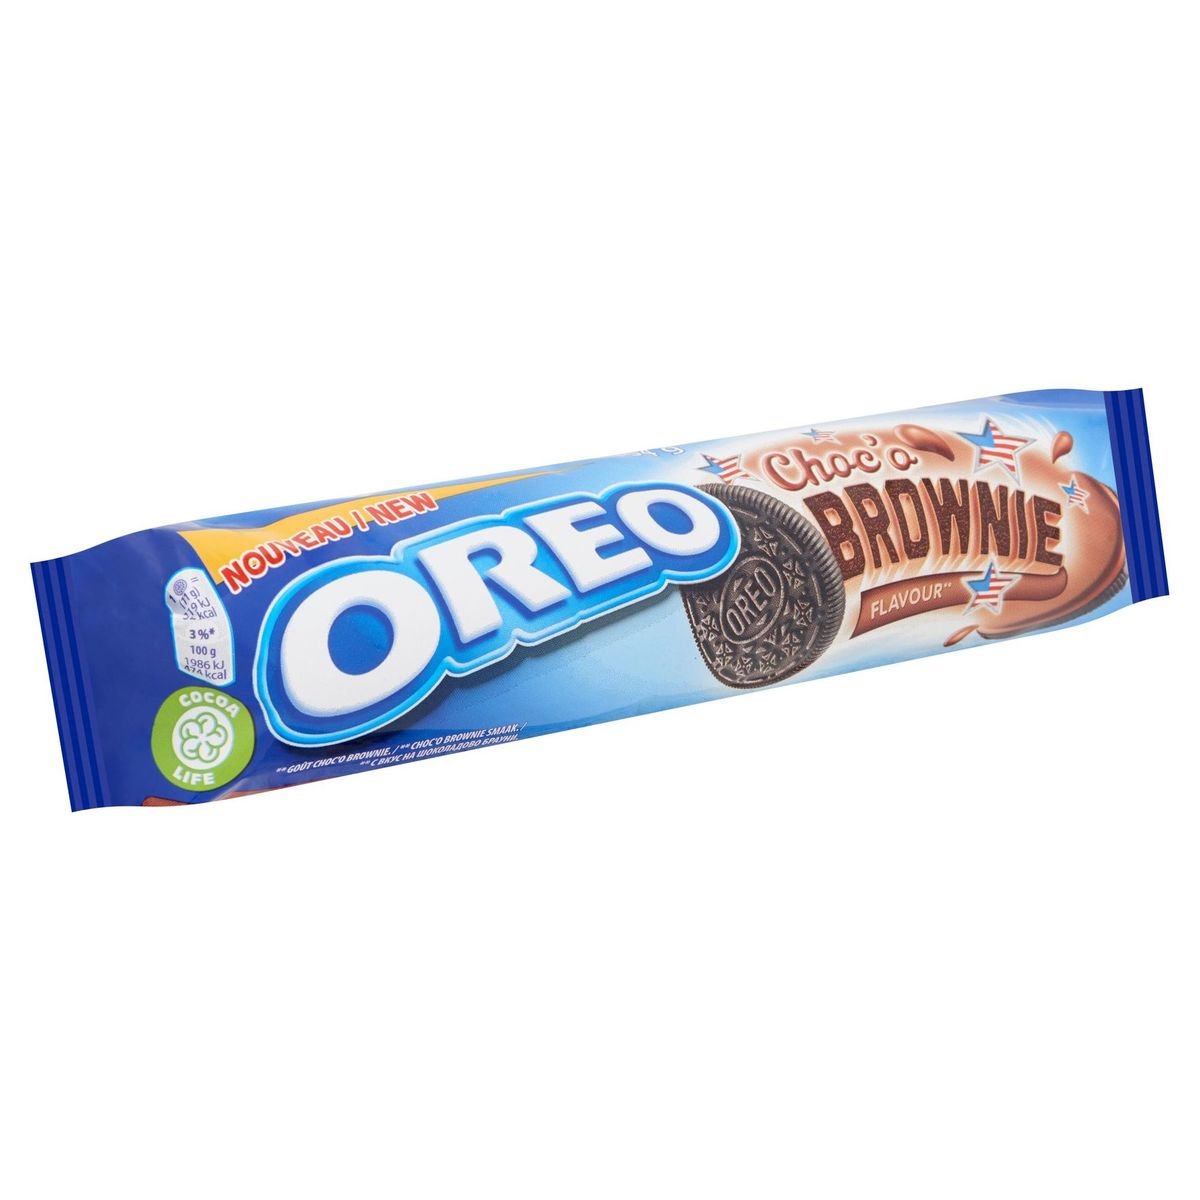 Oreo Choc'o Brownie Koekjes 154 g